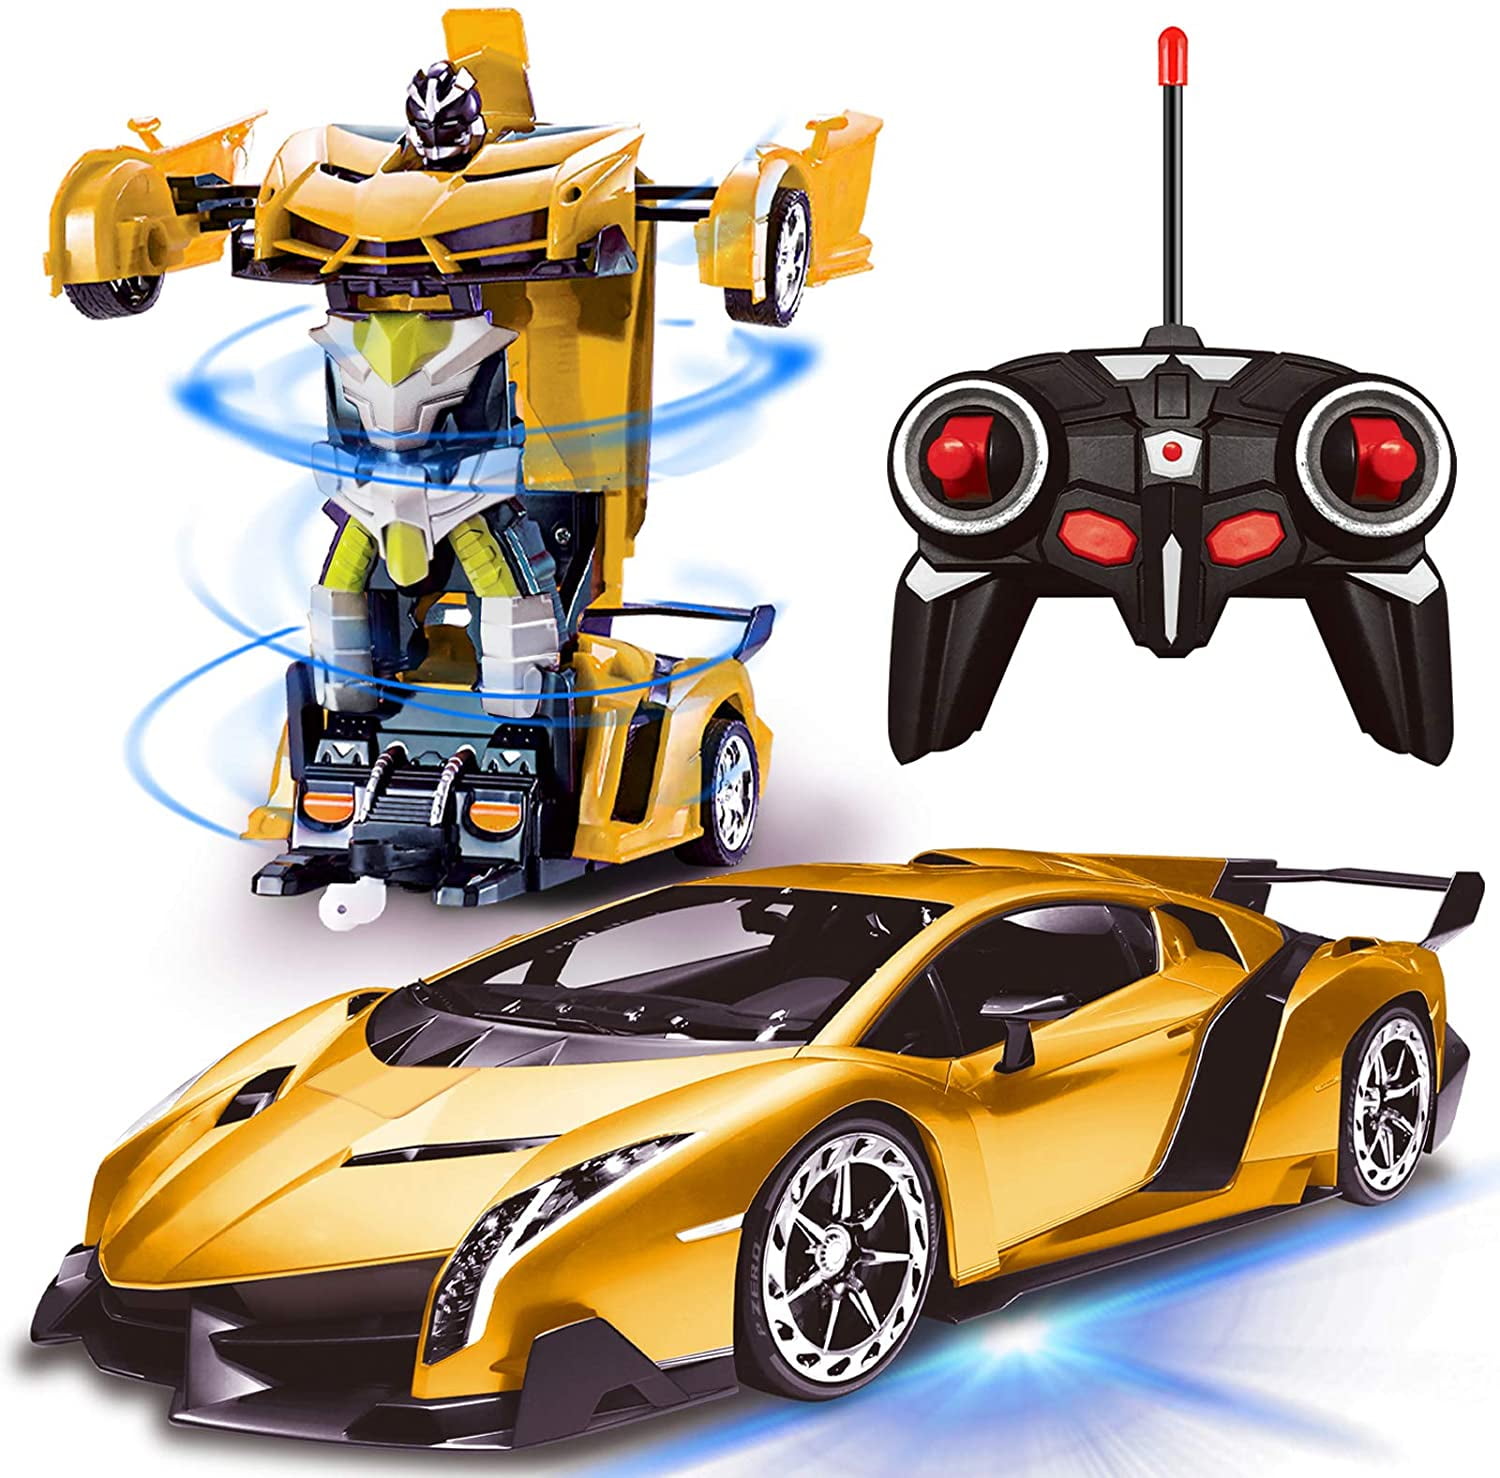 1:18 Transformer RC Car to Robot One Key Deformation Remote Control Light Toy 